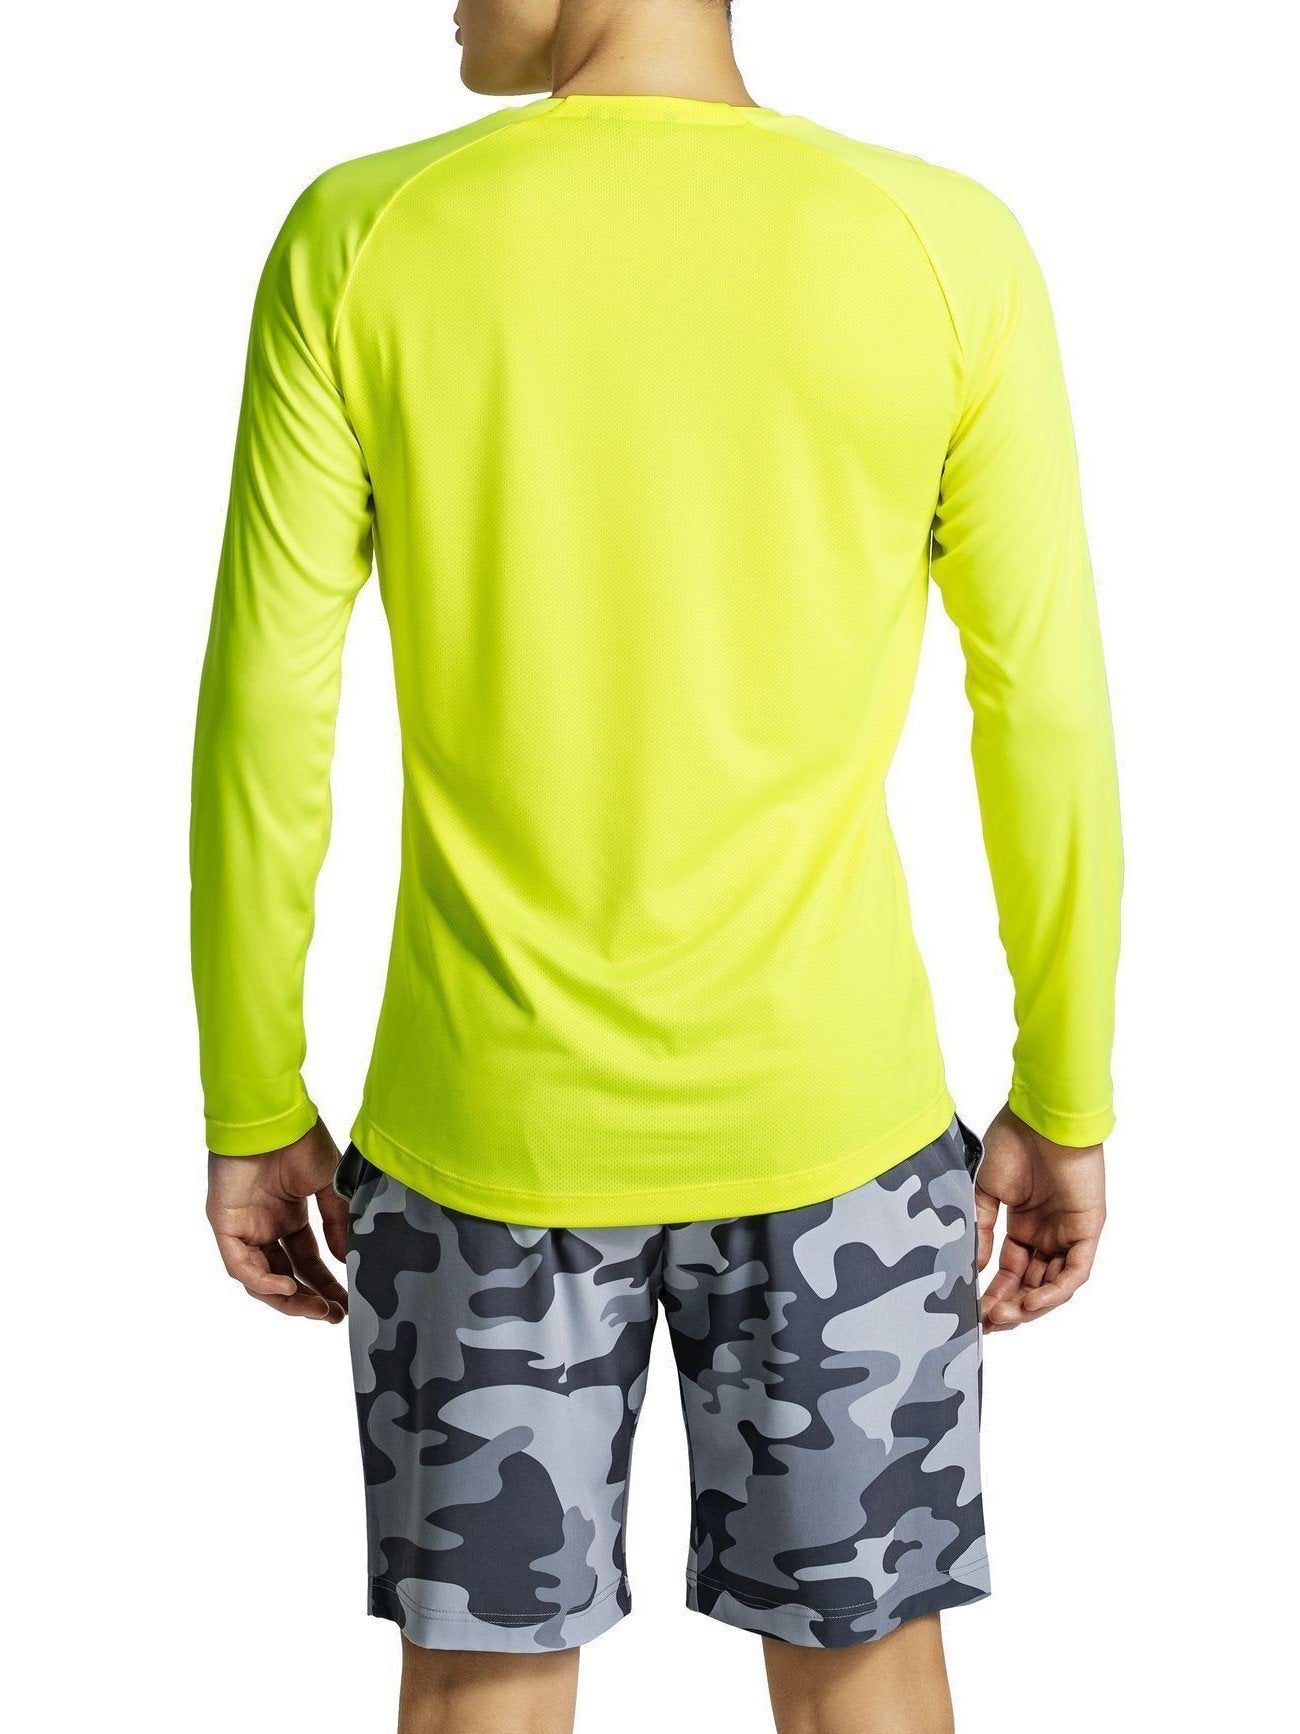 BJORN BORG Ante Long Sleeve Tee Men's Workout Top Yellow - Activemen Clothing